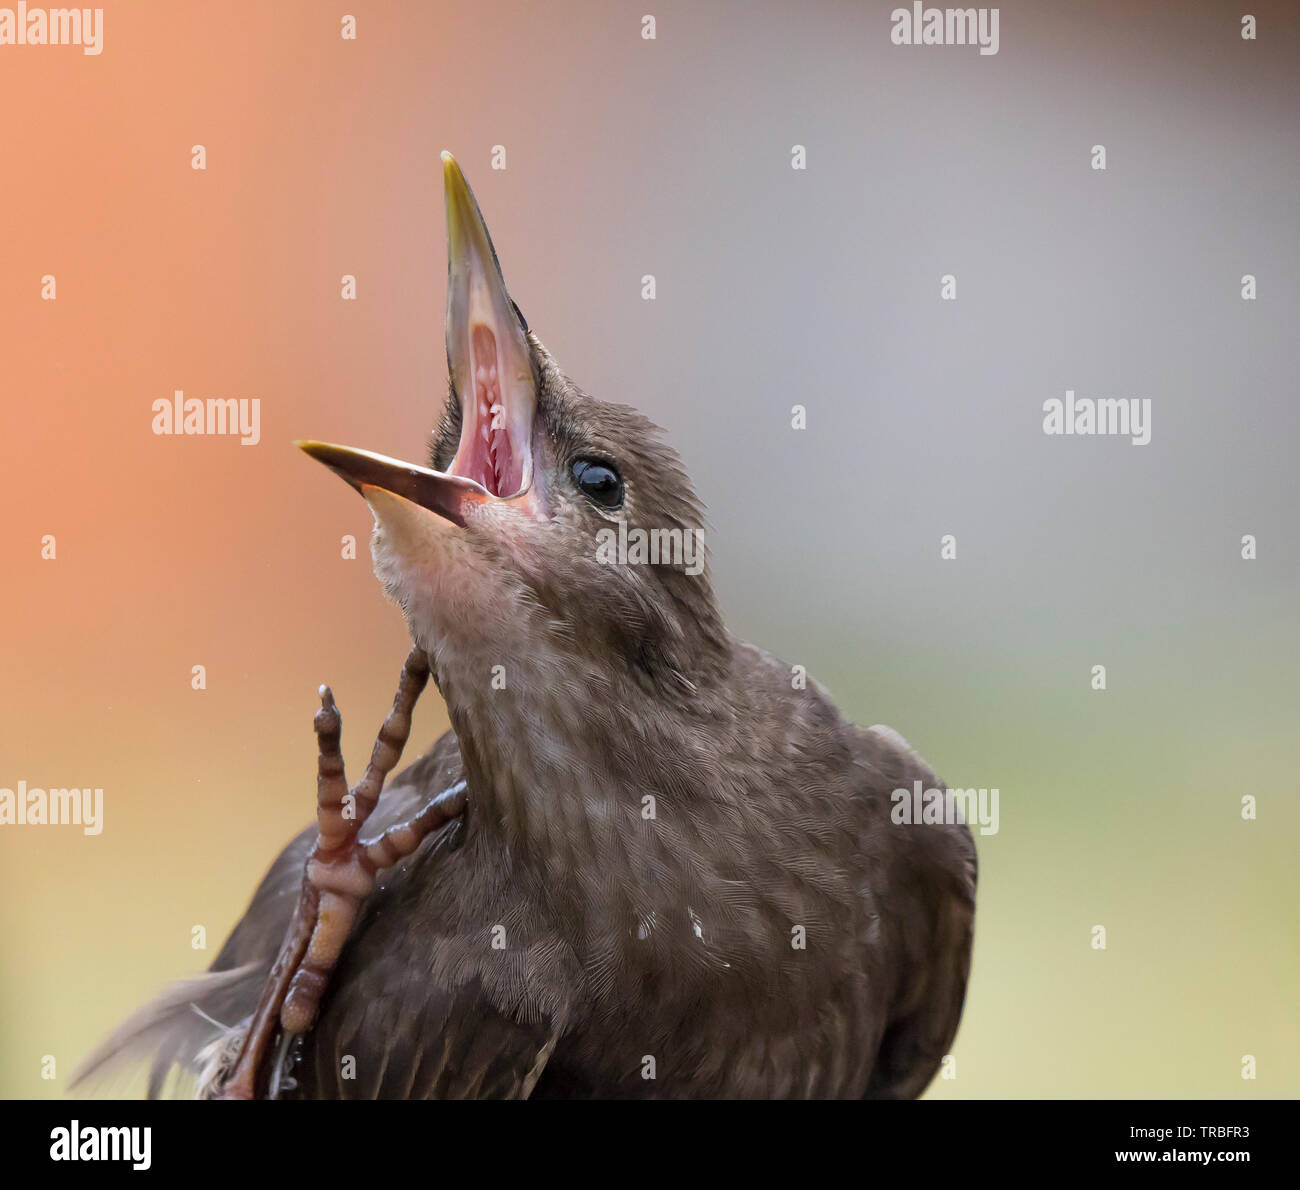 Close up of wild, juvenile starling bird (Sturnus vulgaris) preening, beak open wide. Amazing rare detail inside bird's mouth, upper mandible. Stock Photo